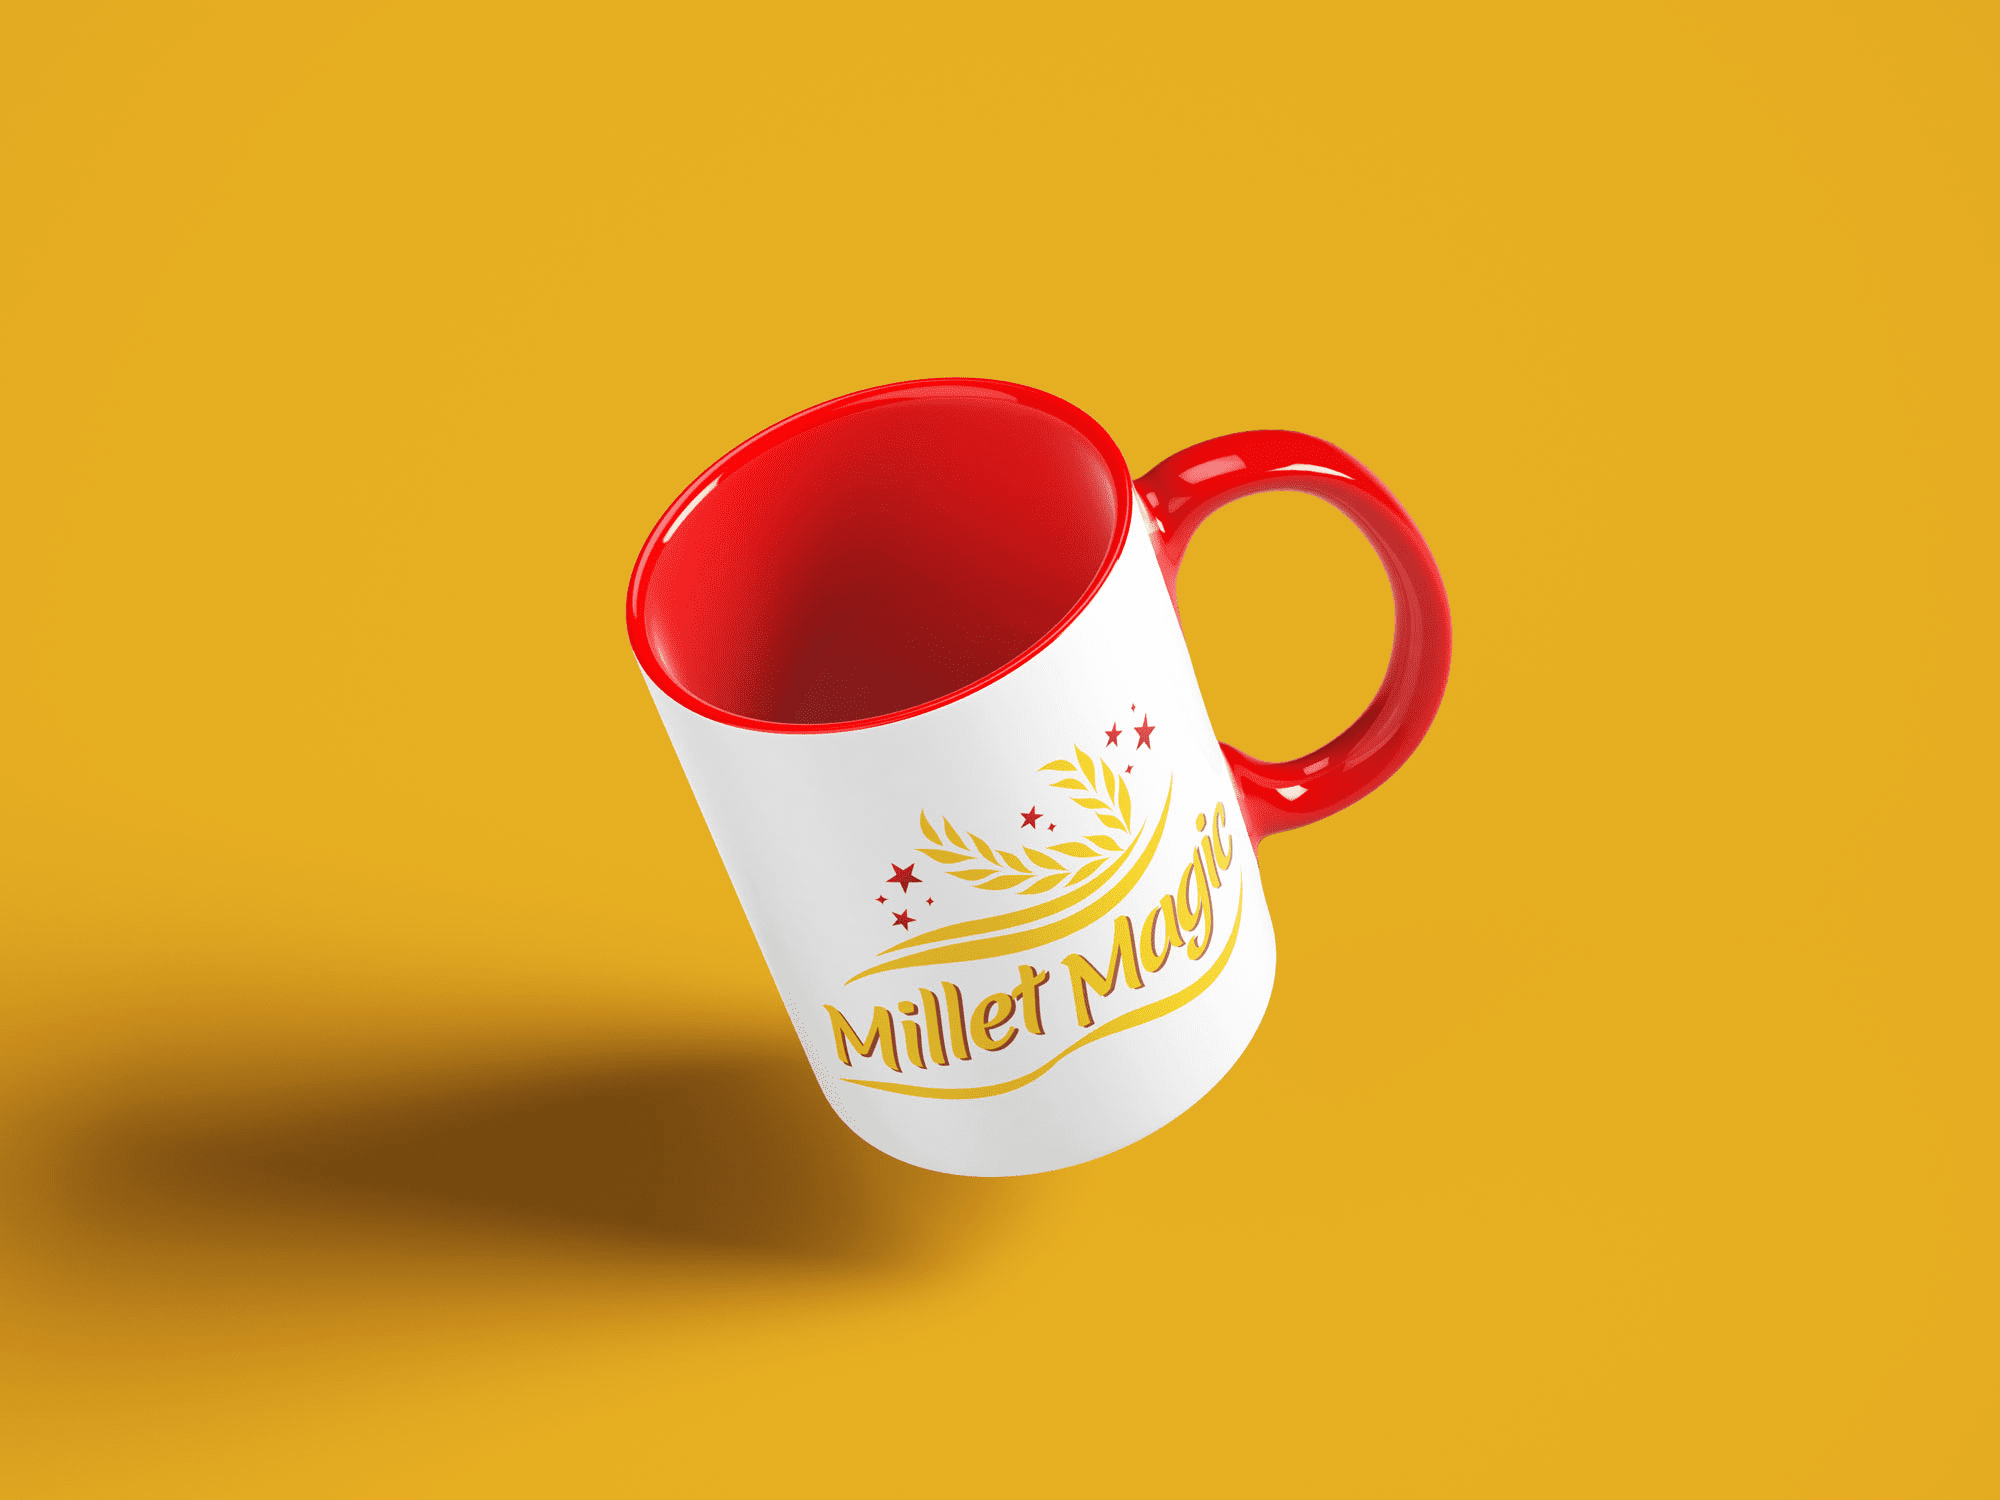 18 Millet Magic Mug Graphic Design, Branding Packaging Design in Salem by Creative Prints thecreativeprints